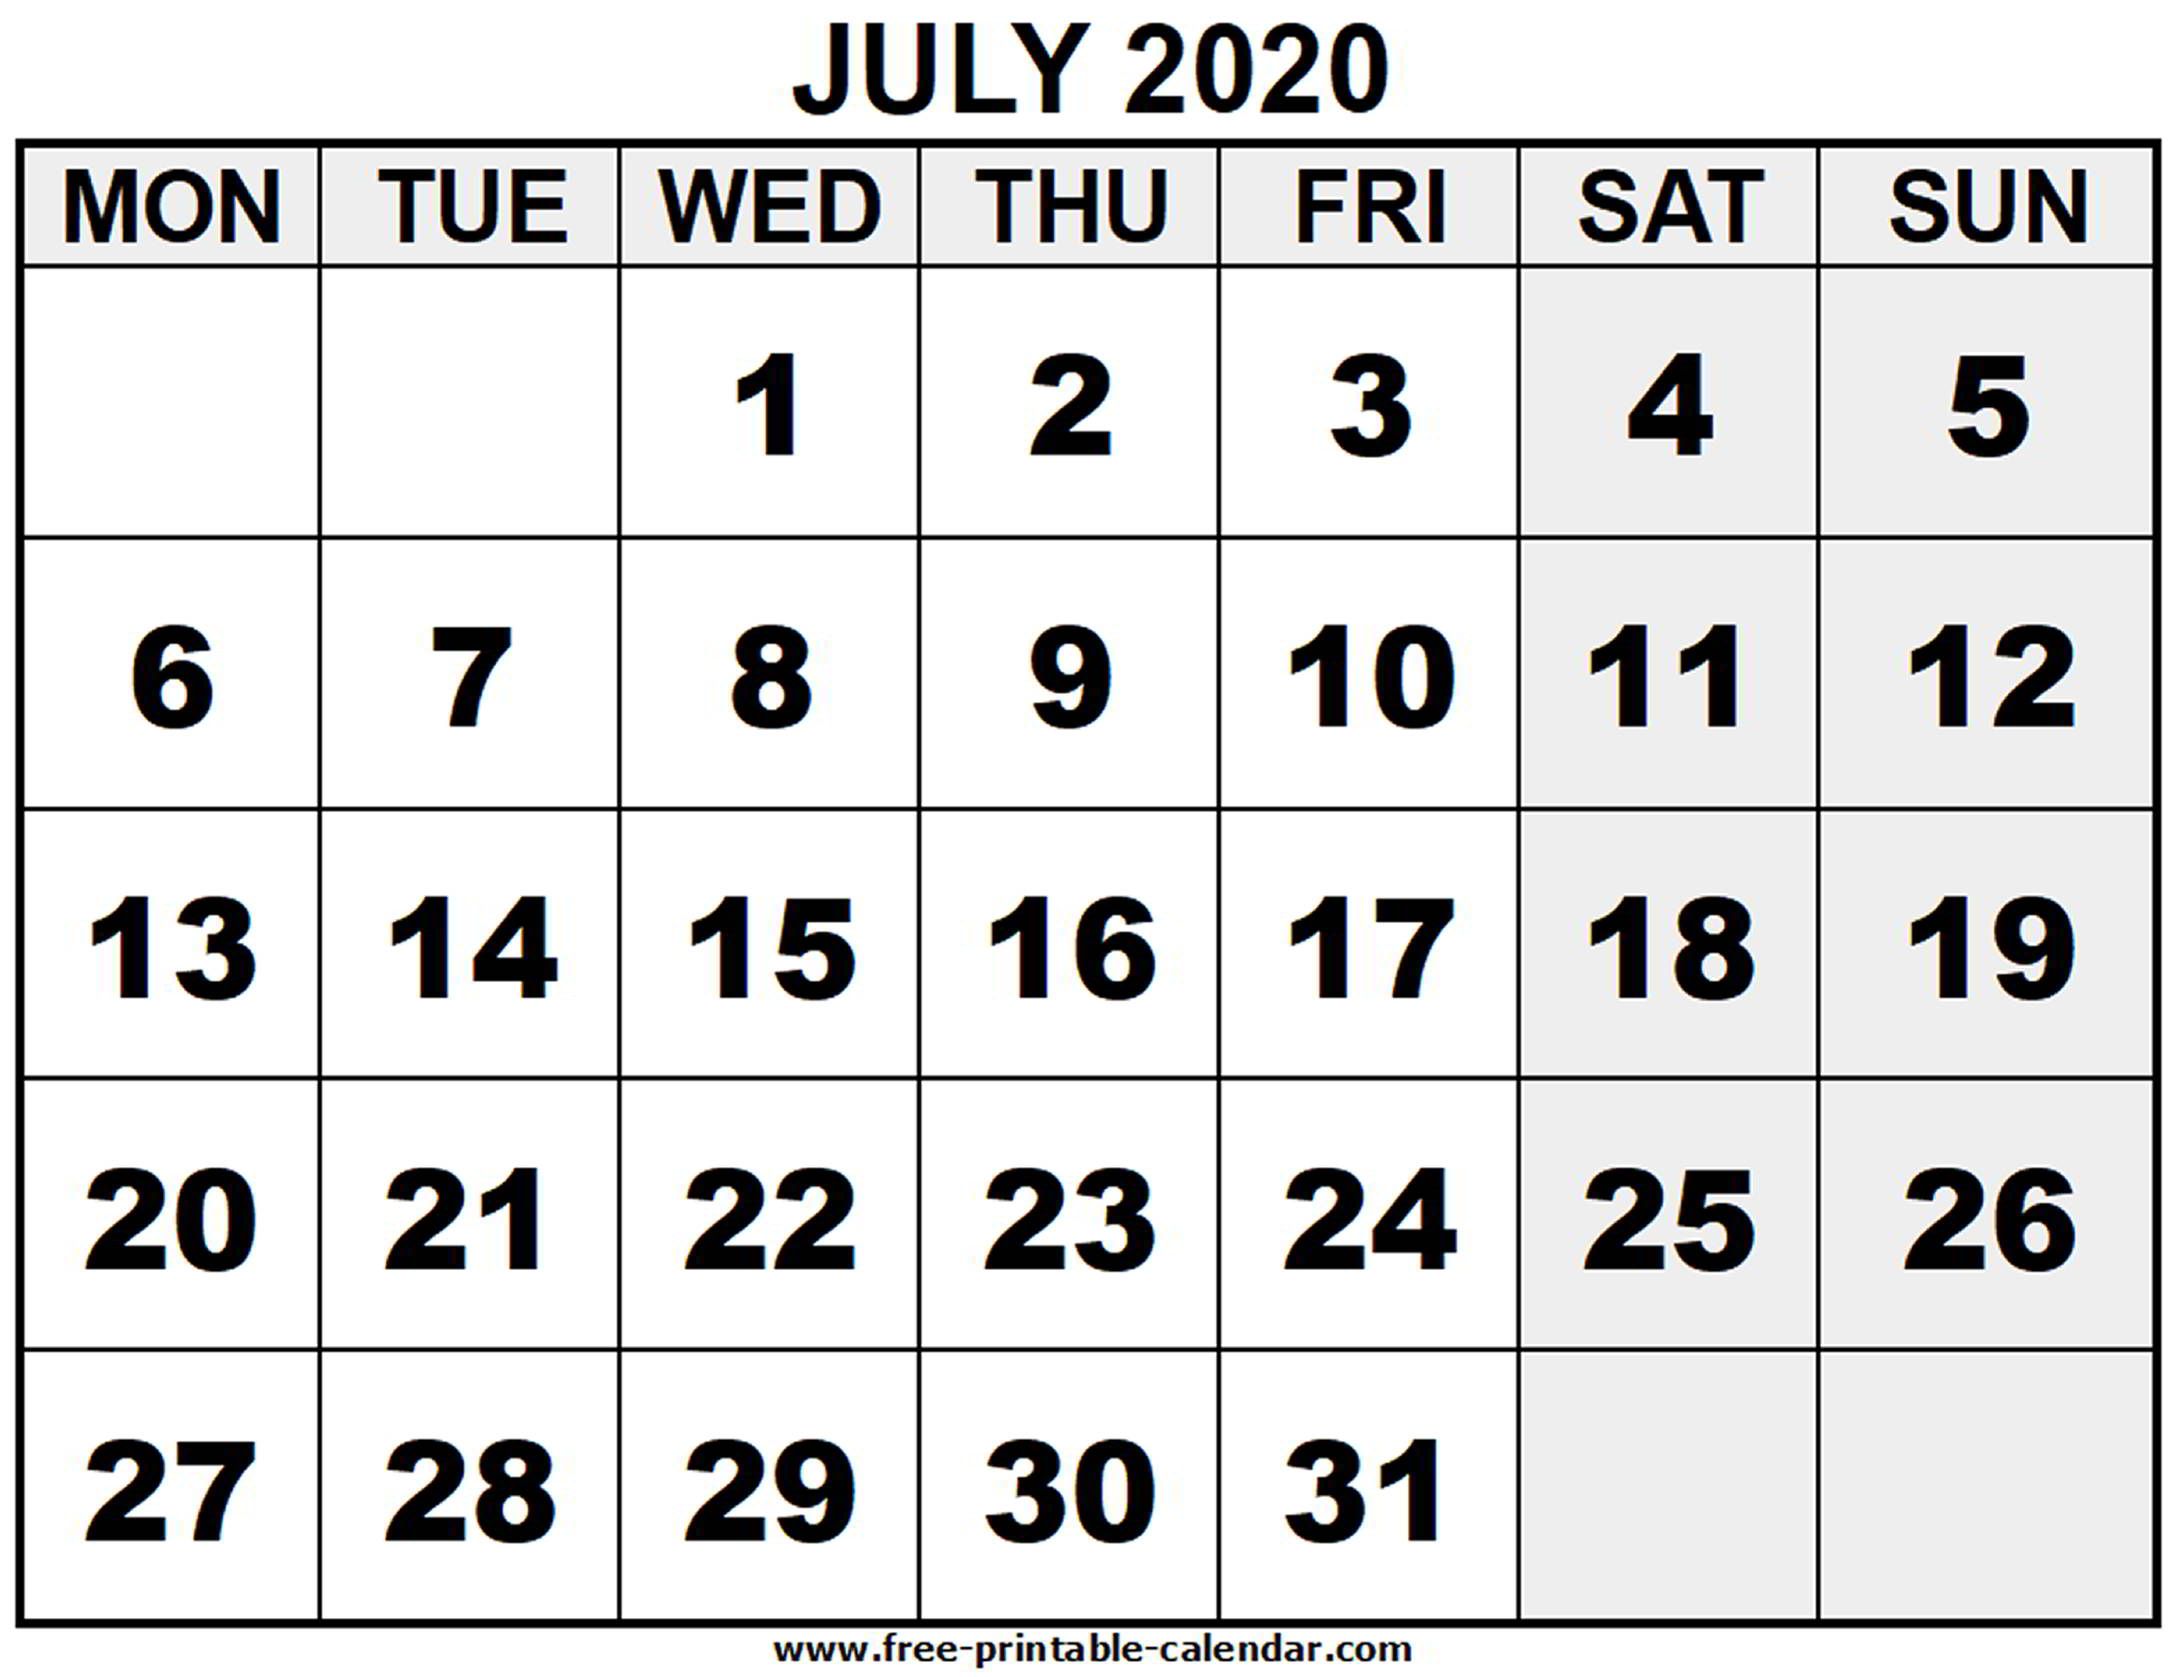 2020 July - Free-Printable-Calendar